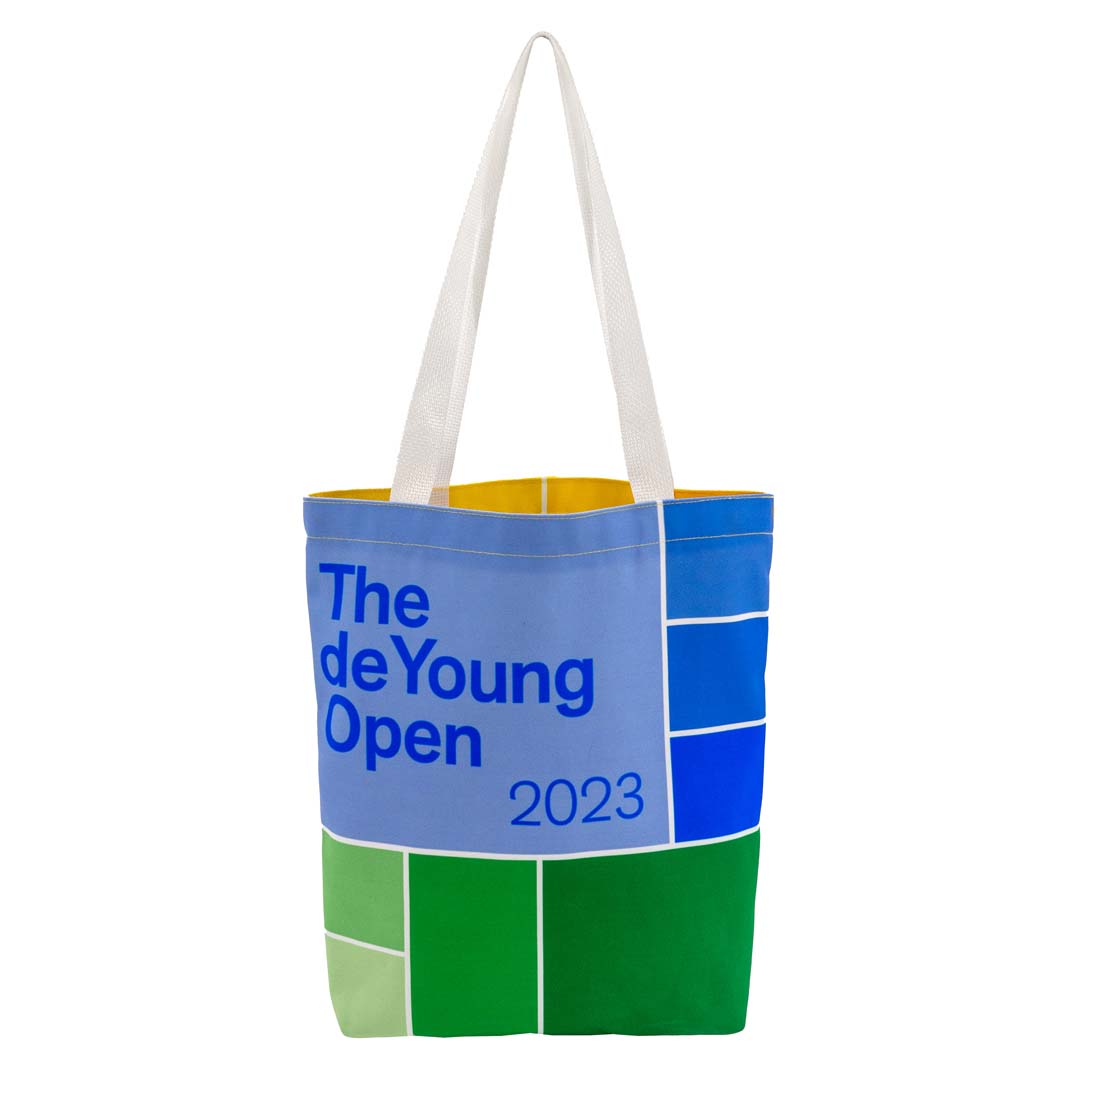 The de Young Open Tote Bag